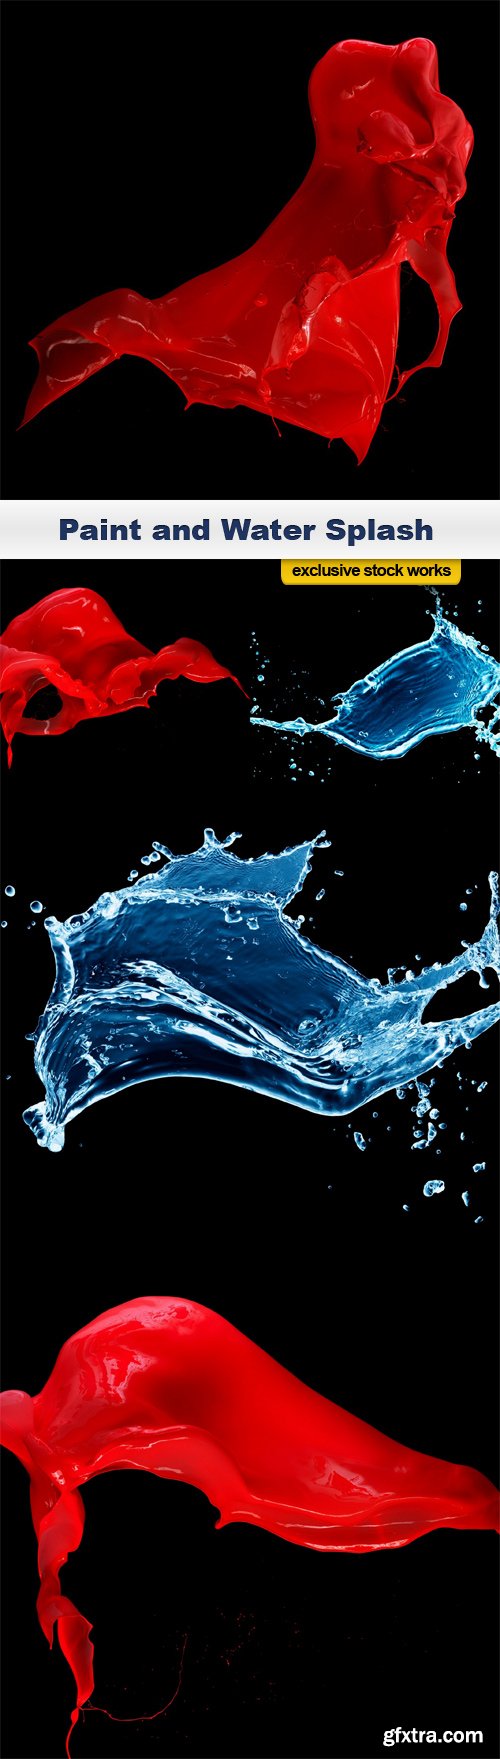 Paint and Water Splash - 5 UHQ JPEG